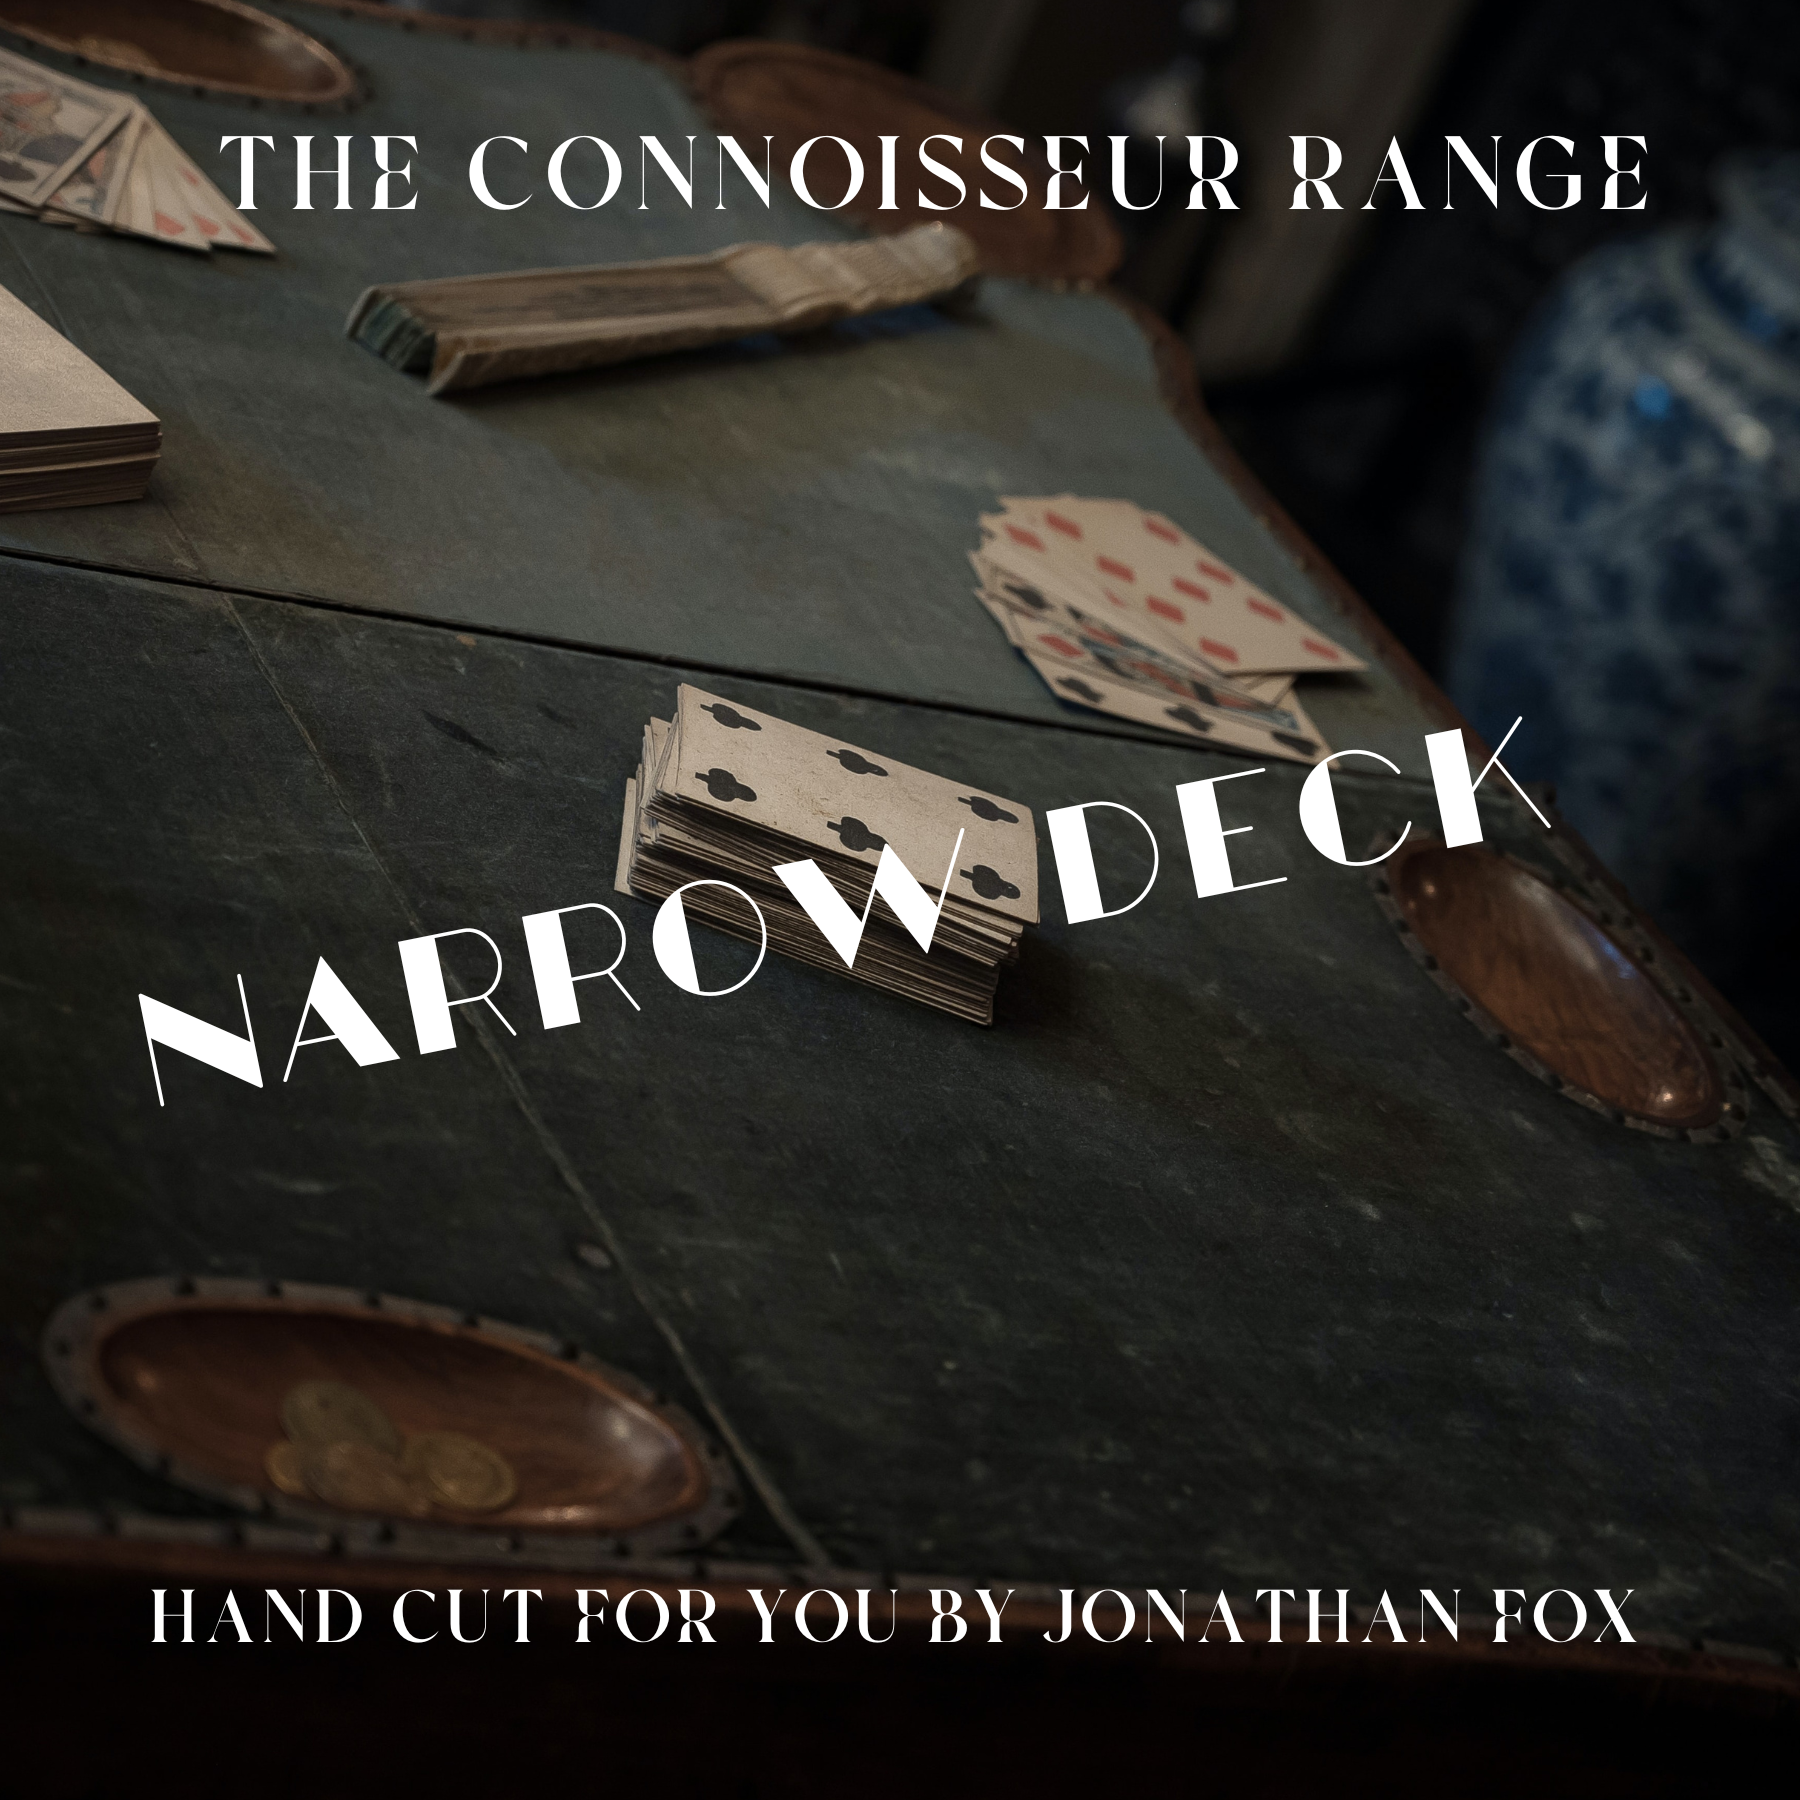 Narrow Deck by Jonathan Fox